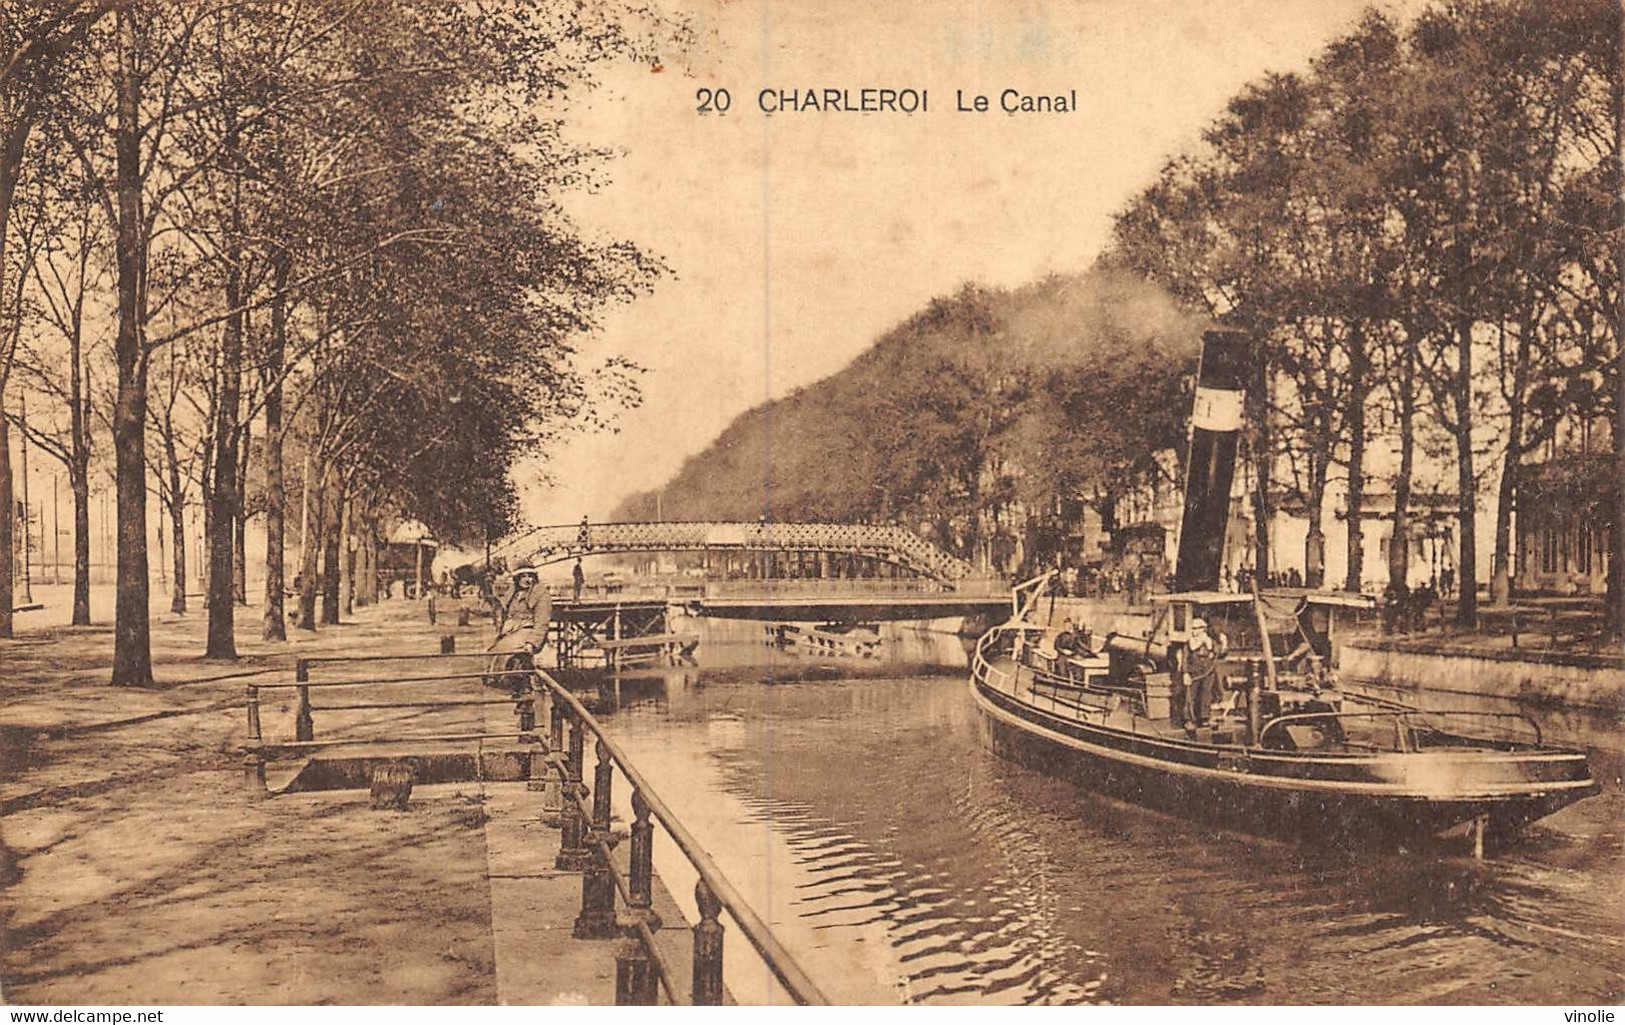 PIE-Th.Mu-22-8302 : CHARLEROI. LE CANAL. REMORQUEUR TYPE "GUÊPE" - Charleroi